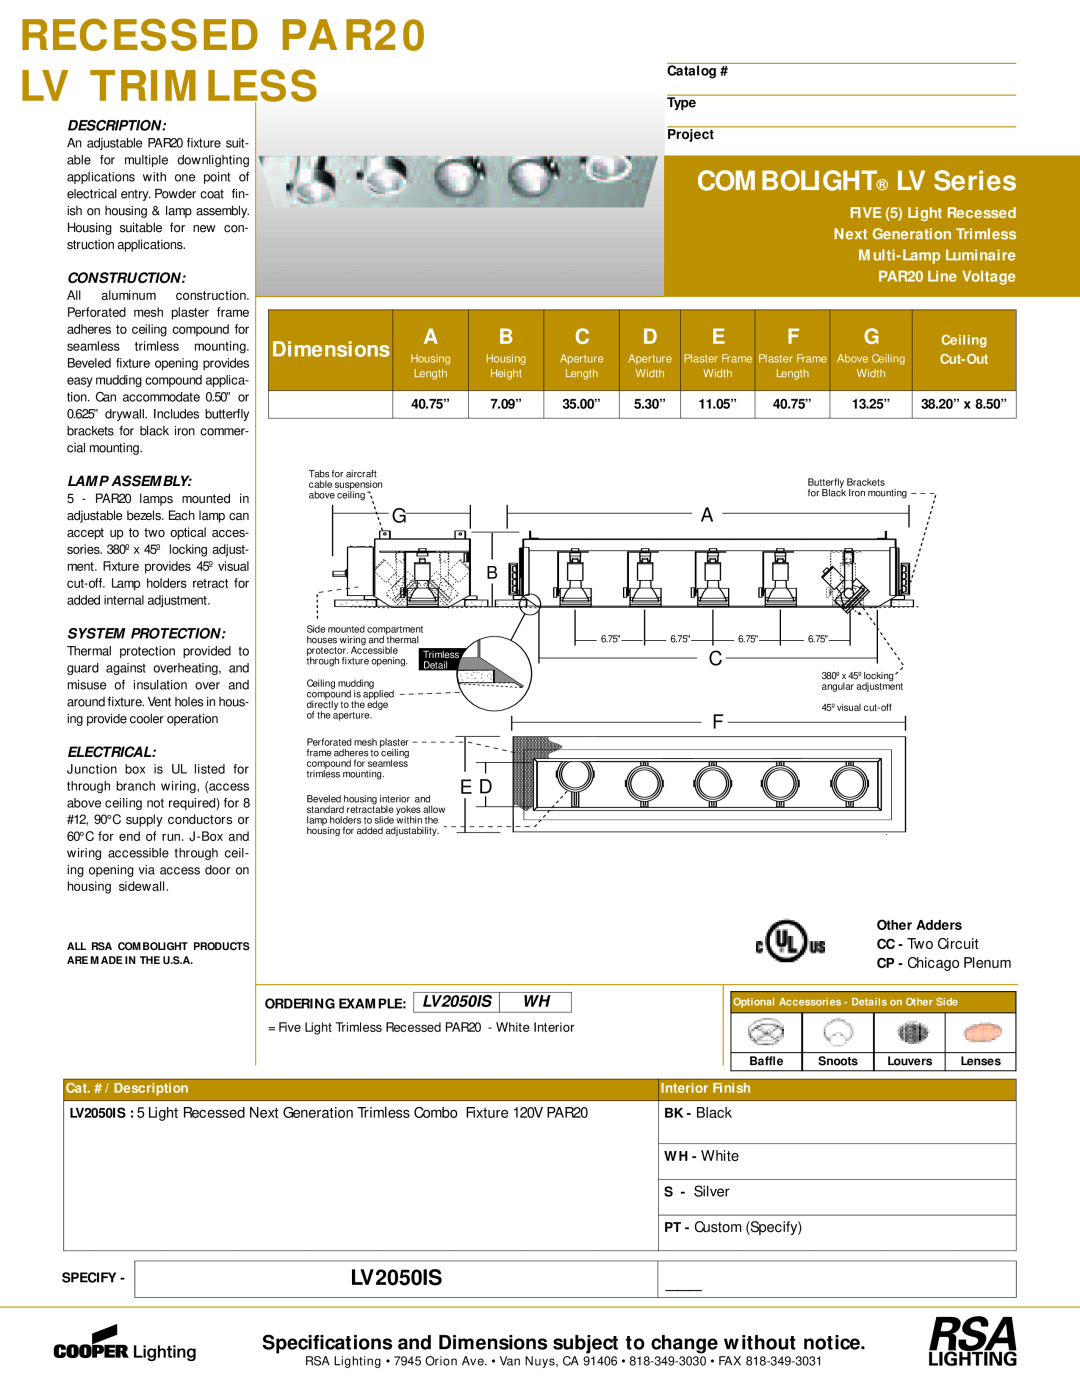 Cooper Lighting LV2050IS dimensions RECESSED PAR20, Lv Trimless, COMBOLIGHT LV Series, Dimensions, PAR20 Line Voltage 